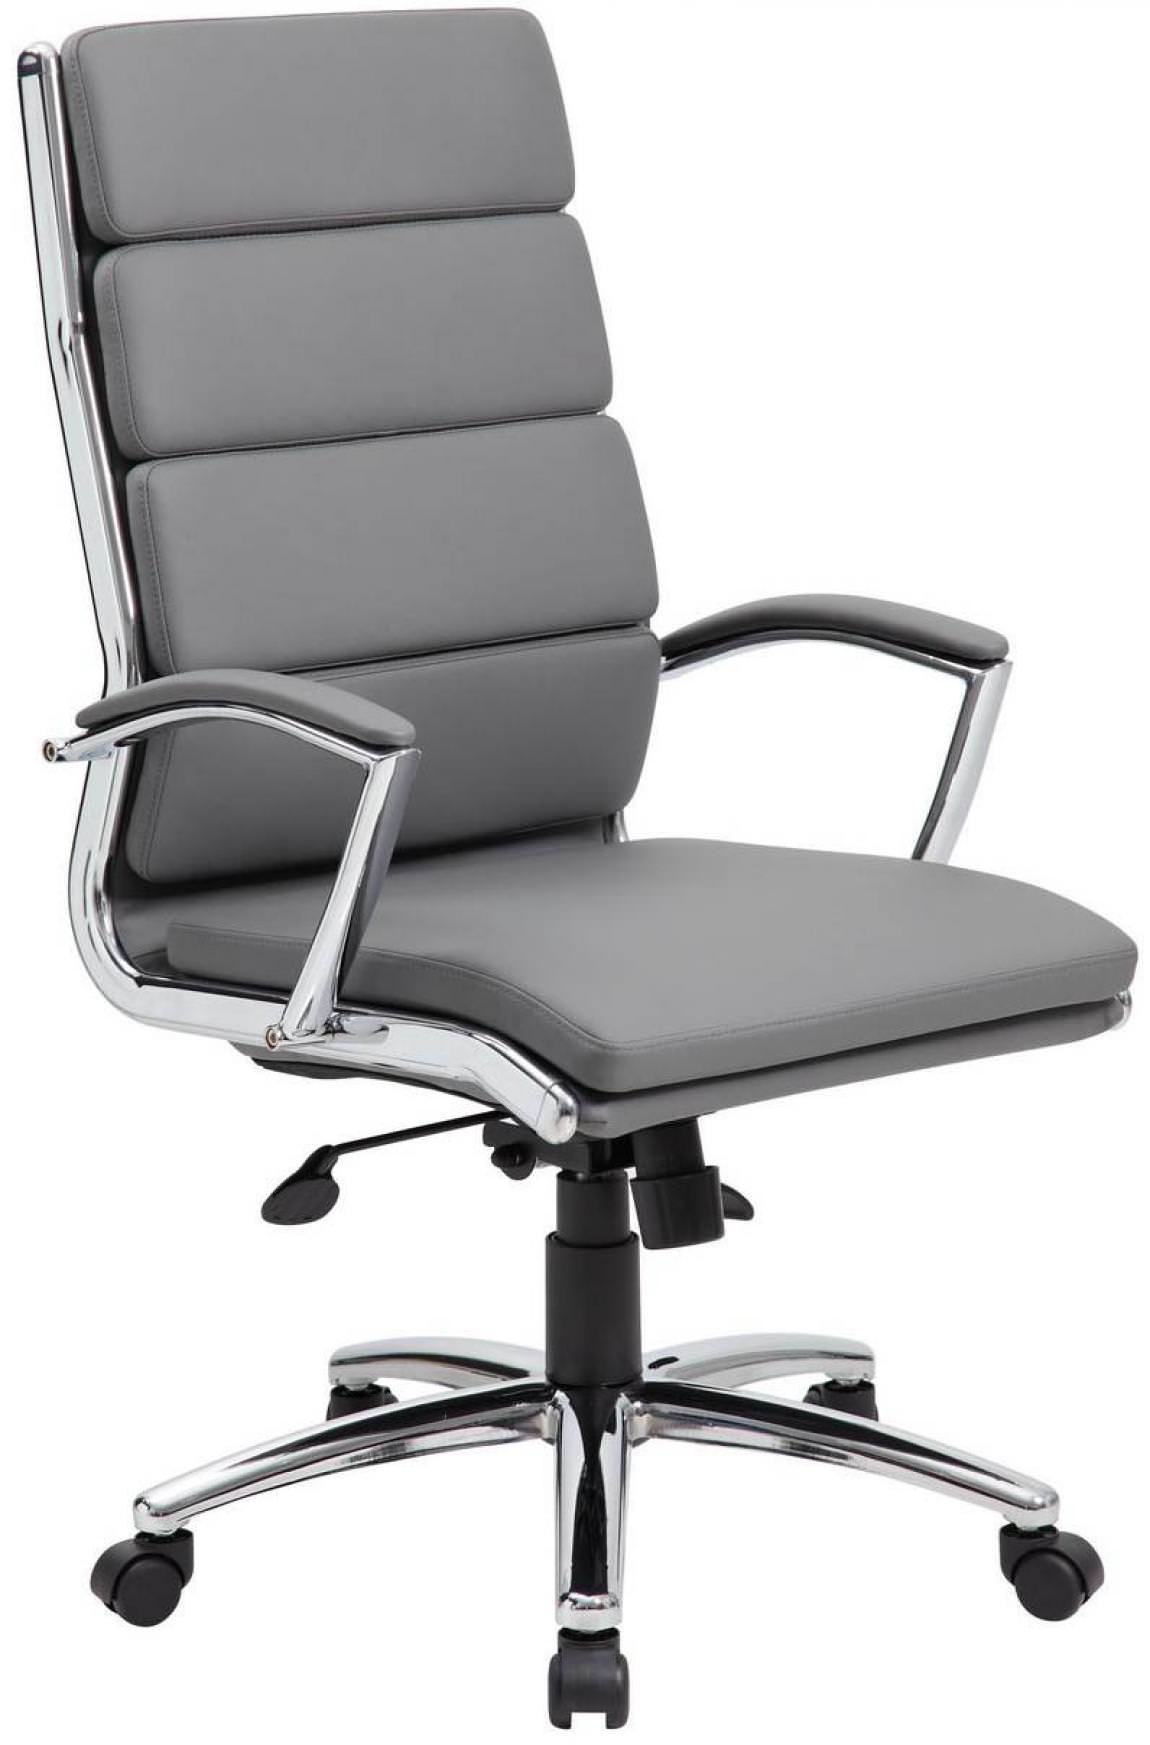 Stylish and Ultra Comfortable Executive Chair